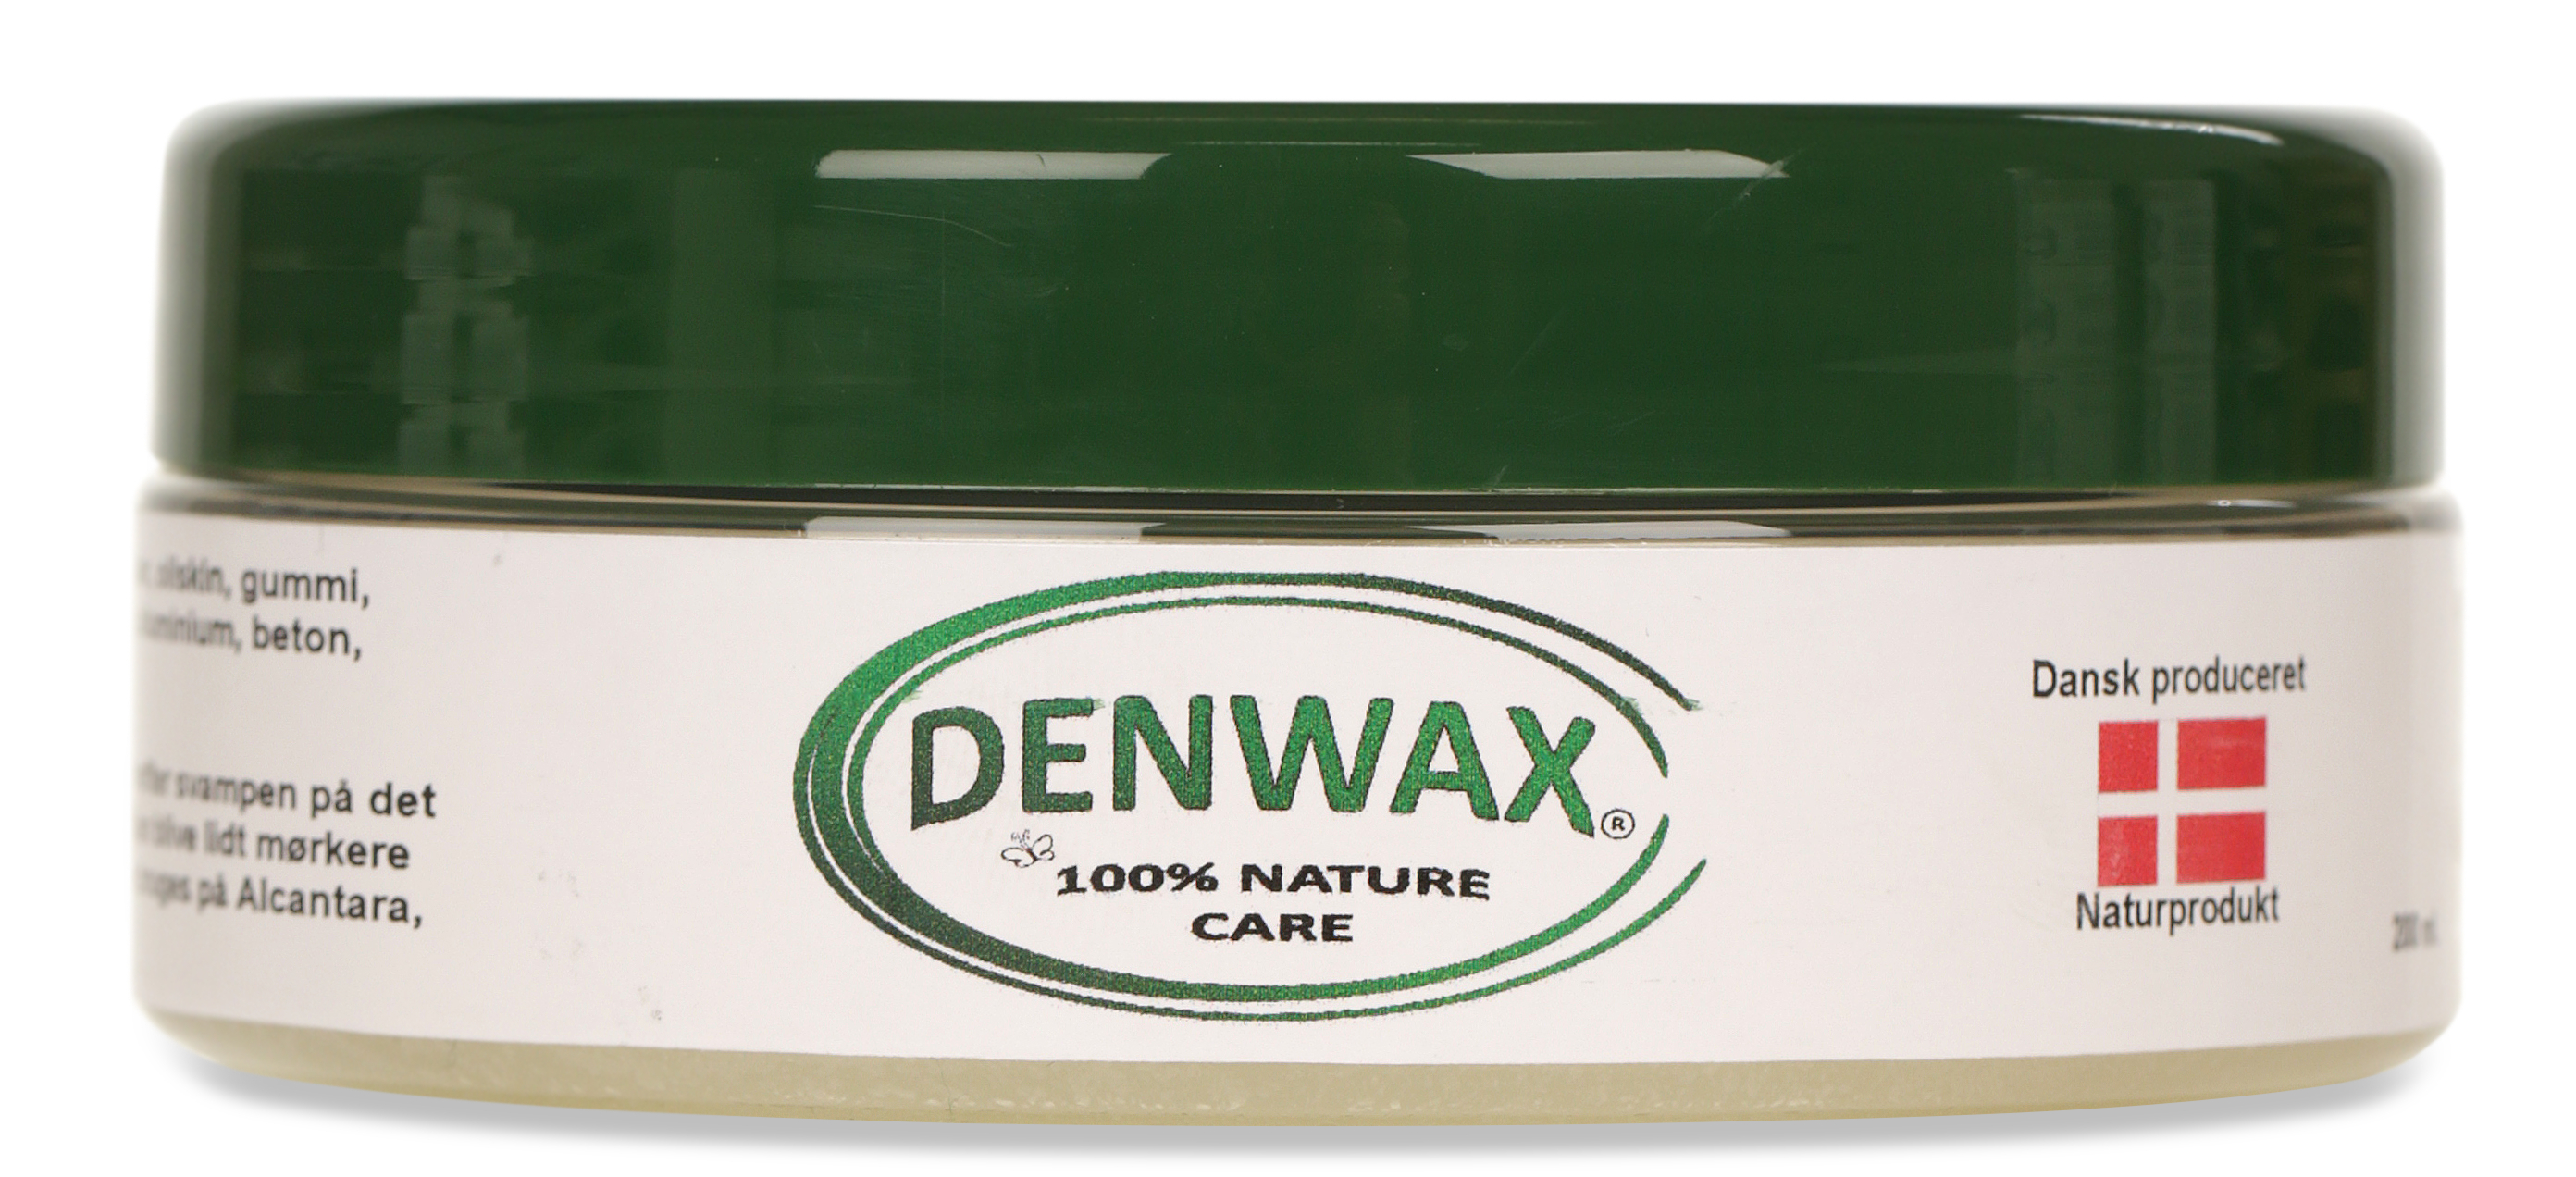 Denwax, Care, 200 ml.